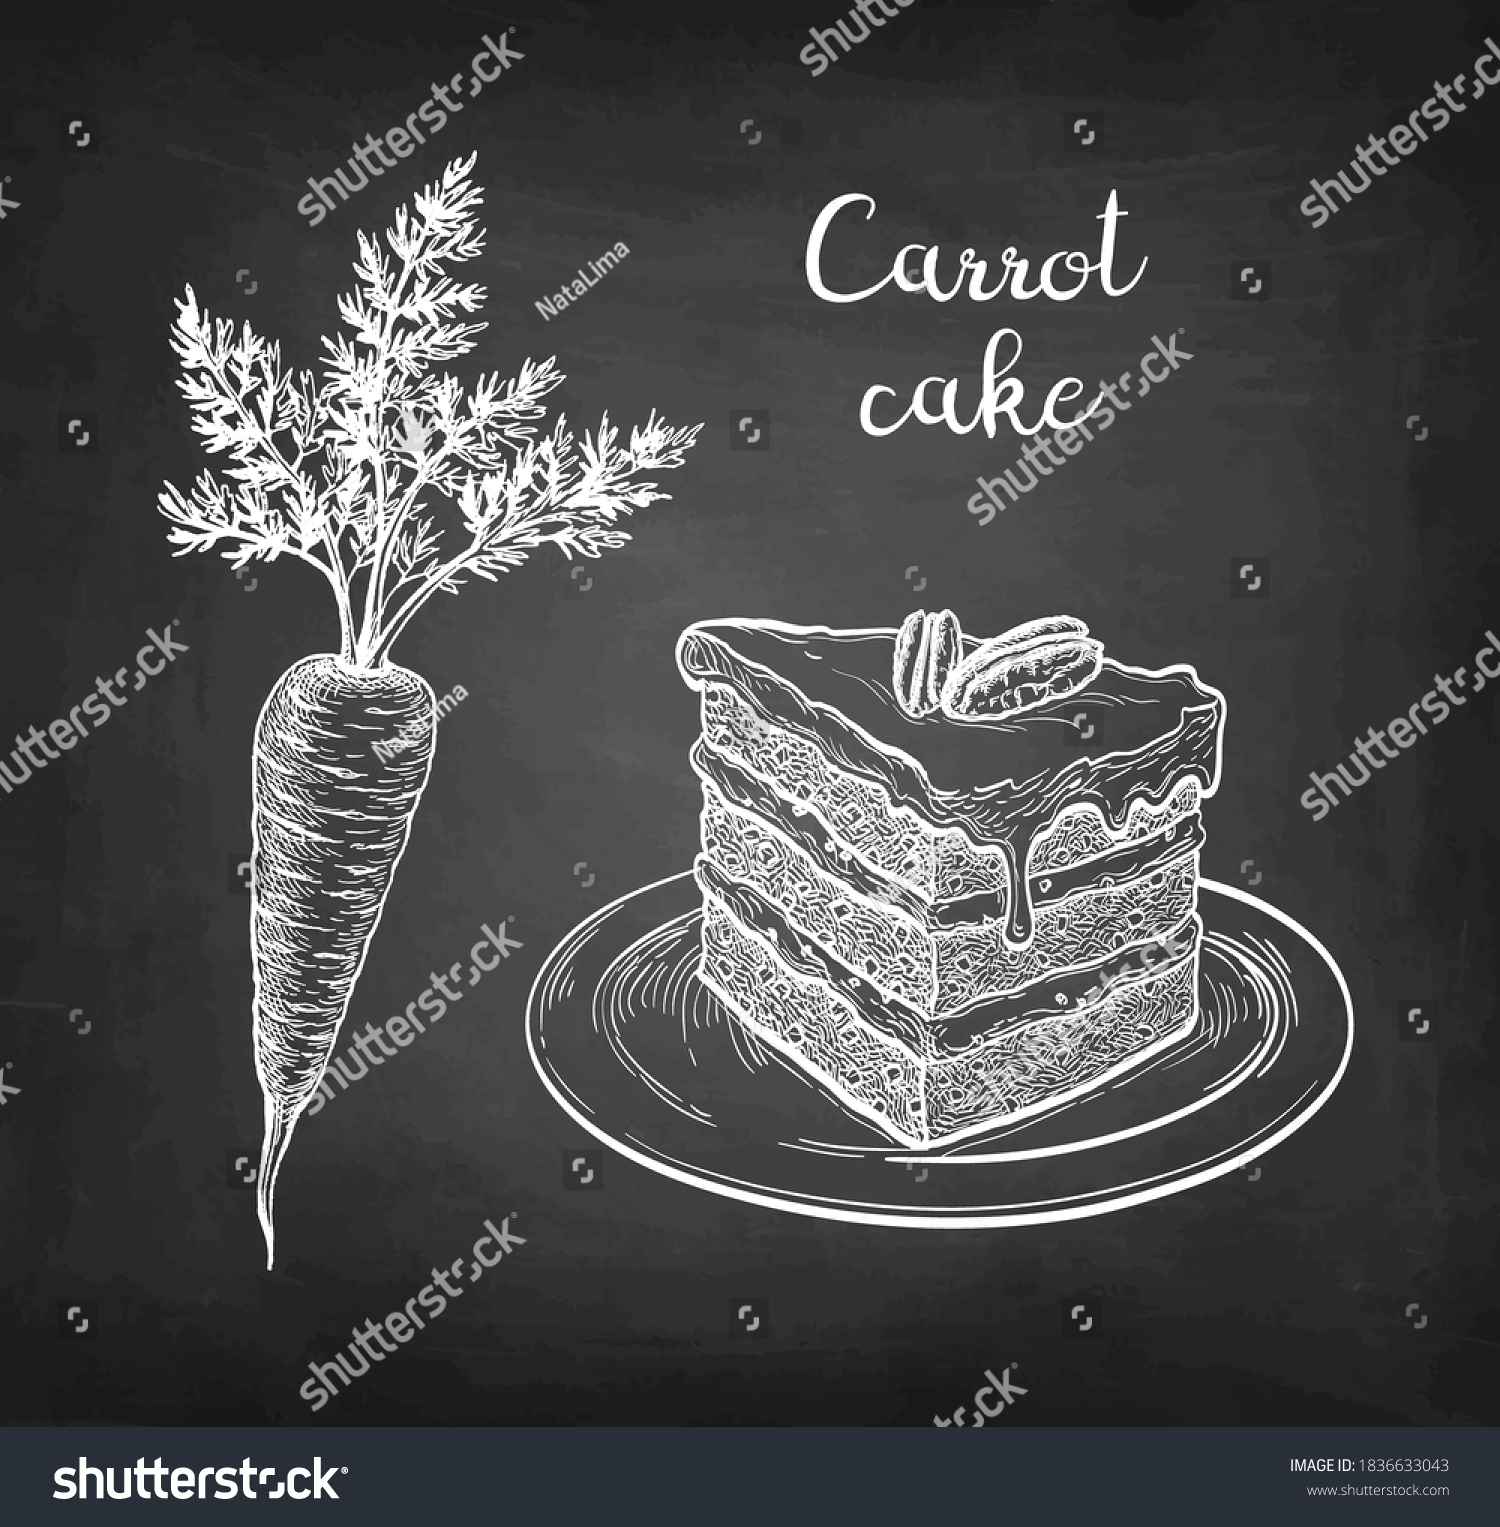 SVG of Carrot cake. Chalk sketch on blackboard background. Hand drawn vector illustration. Retro style. svg